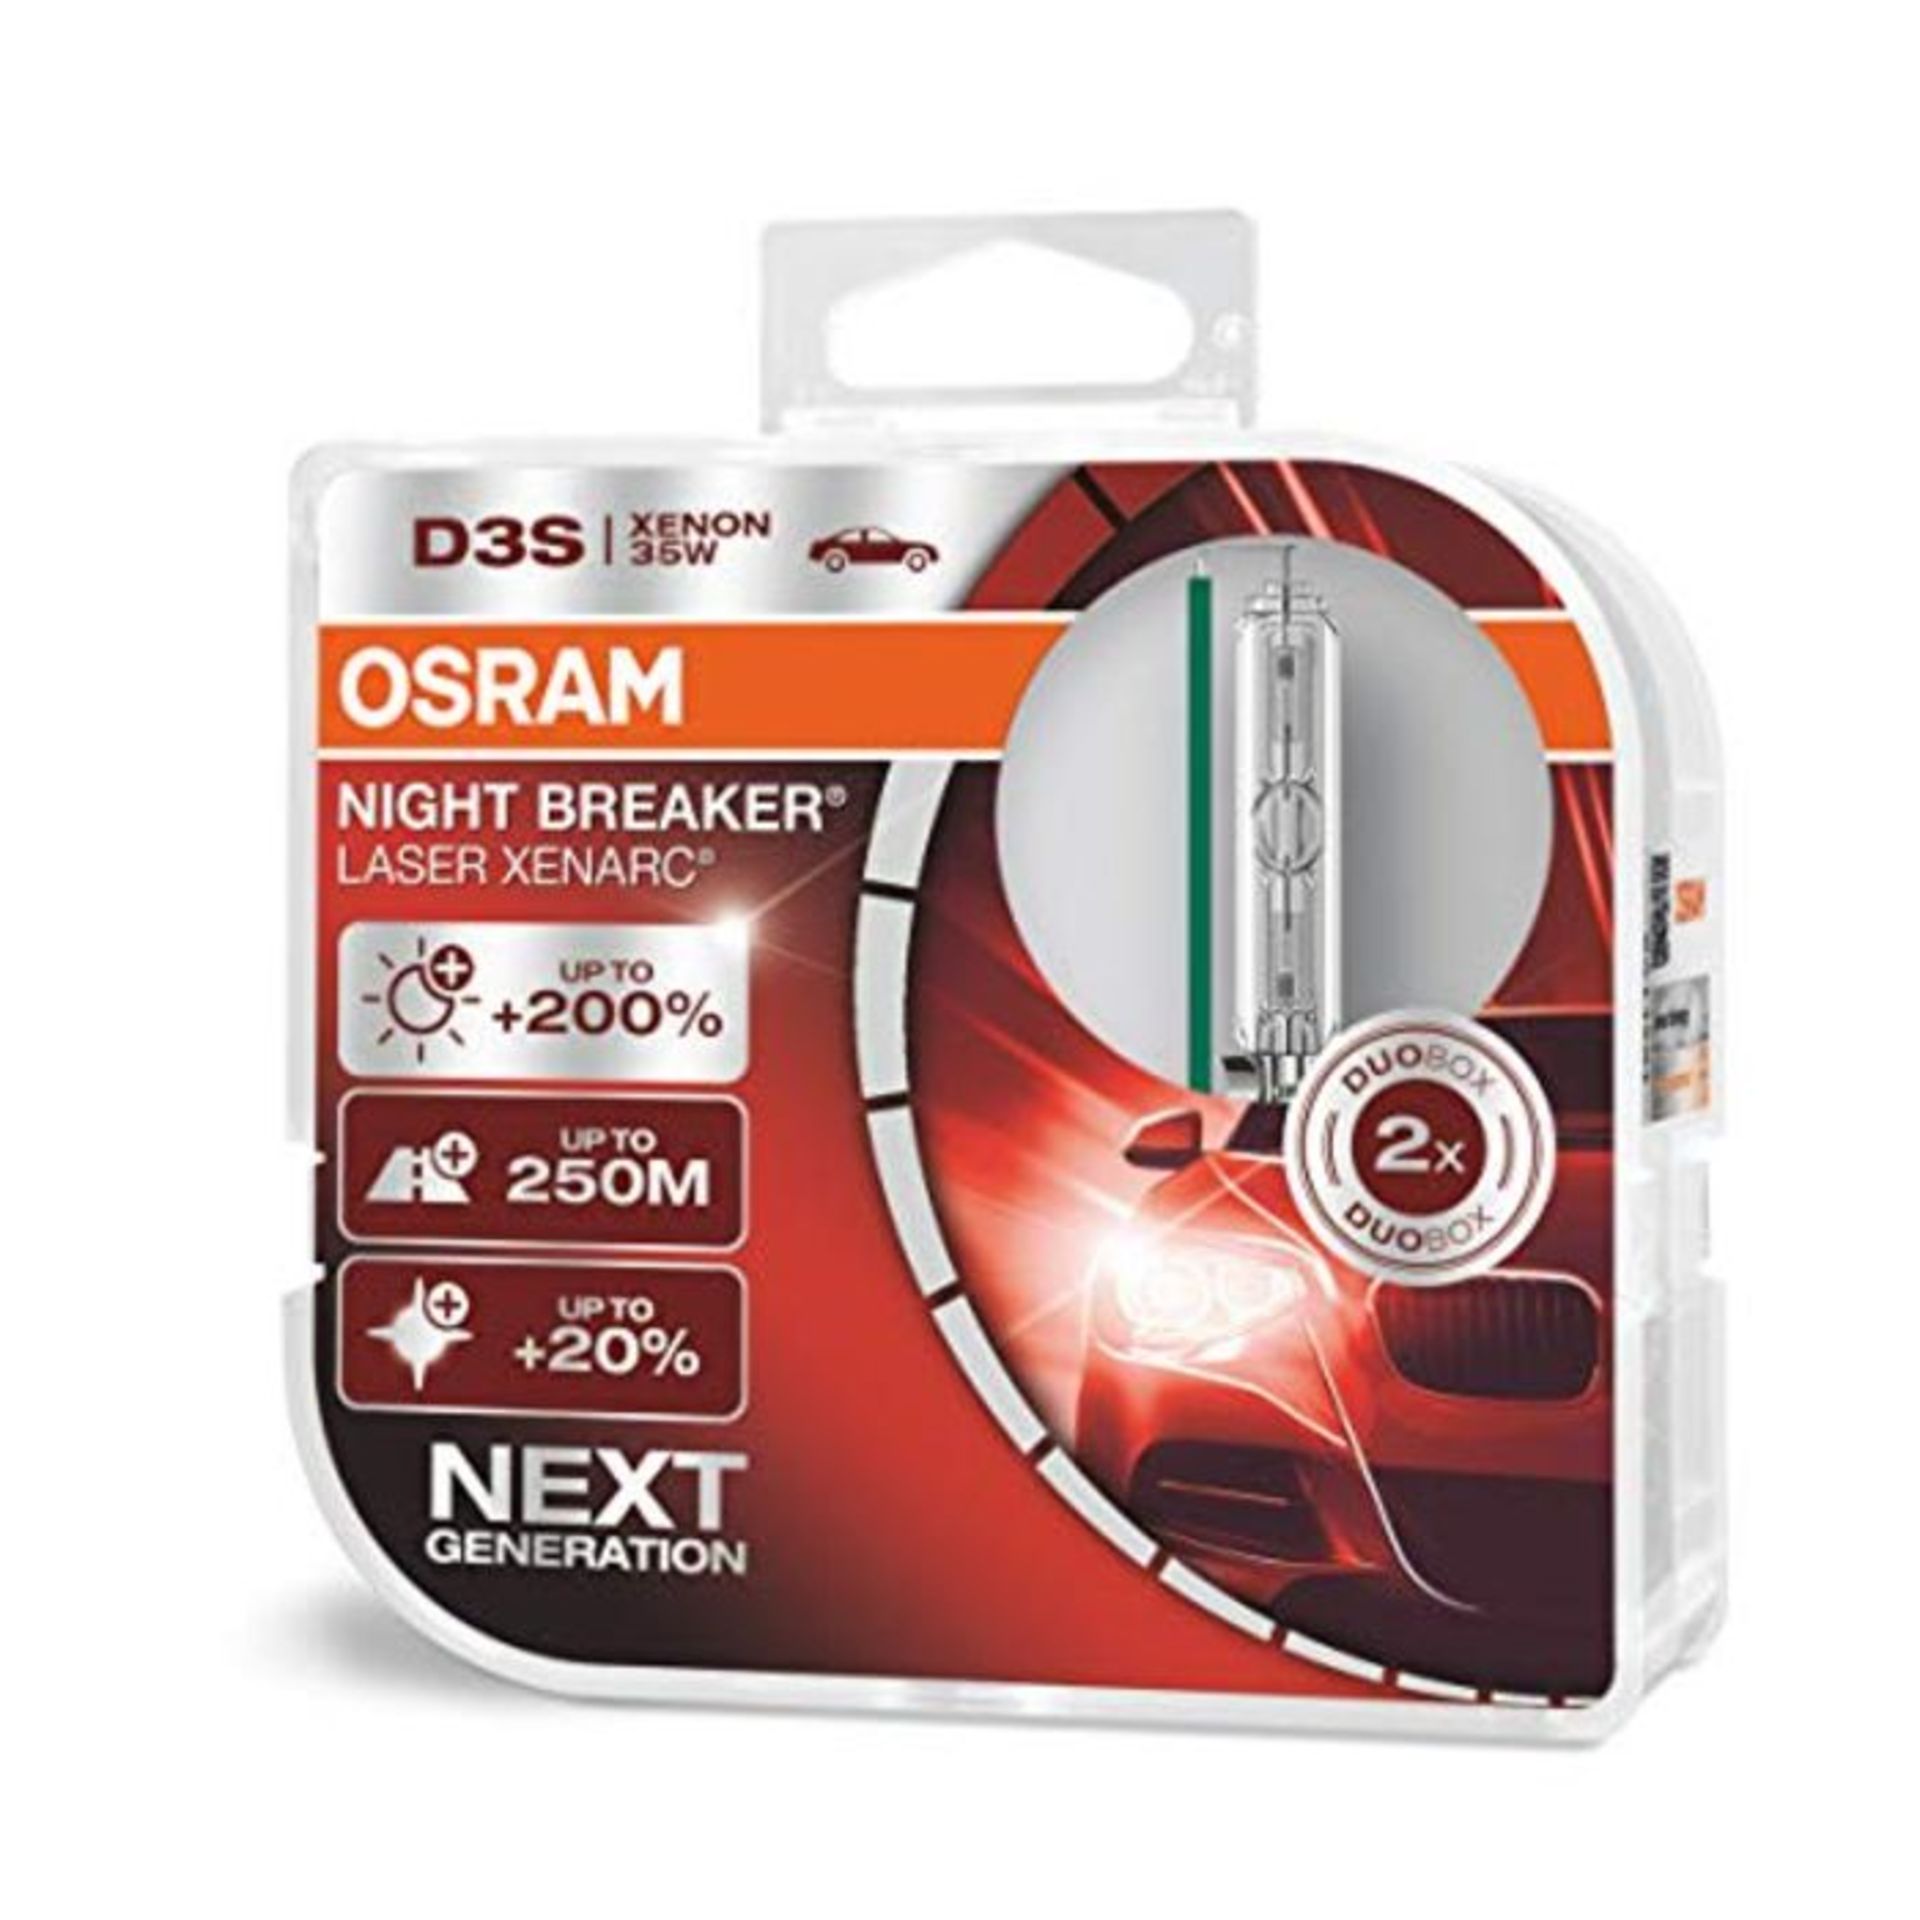 RRP £135.00 OSRAM XENARC NIGHT BREAKER LASER D3S, +200% more brightness, HID xenon bulb, discharge